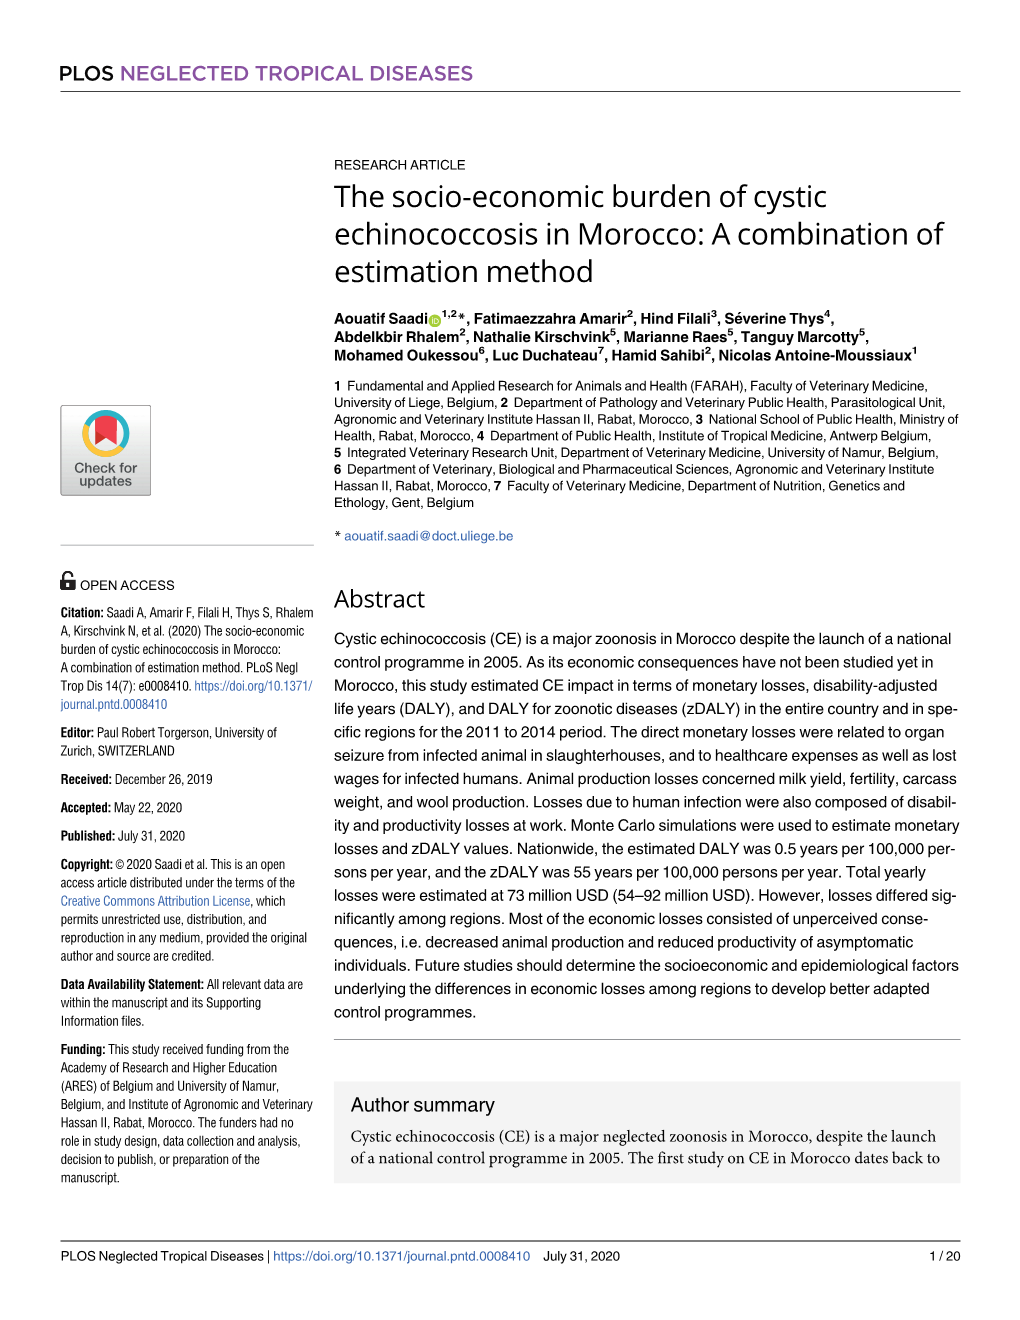 The Socio-Economic Burden of Cystic Echinococcosis in Morocco: a Combination of Estimation Method